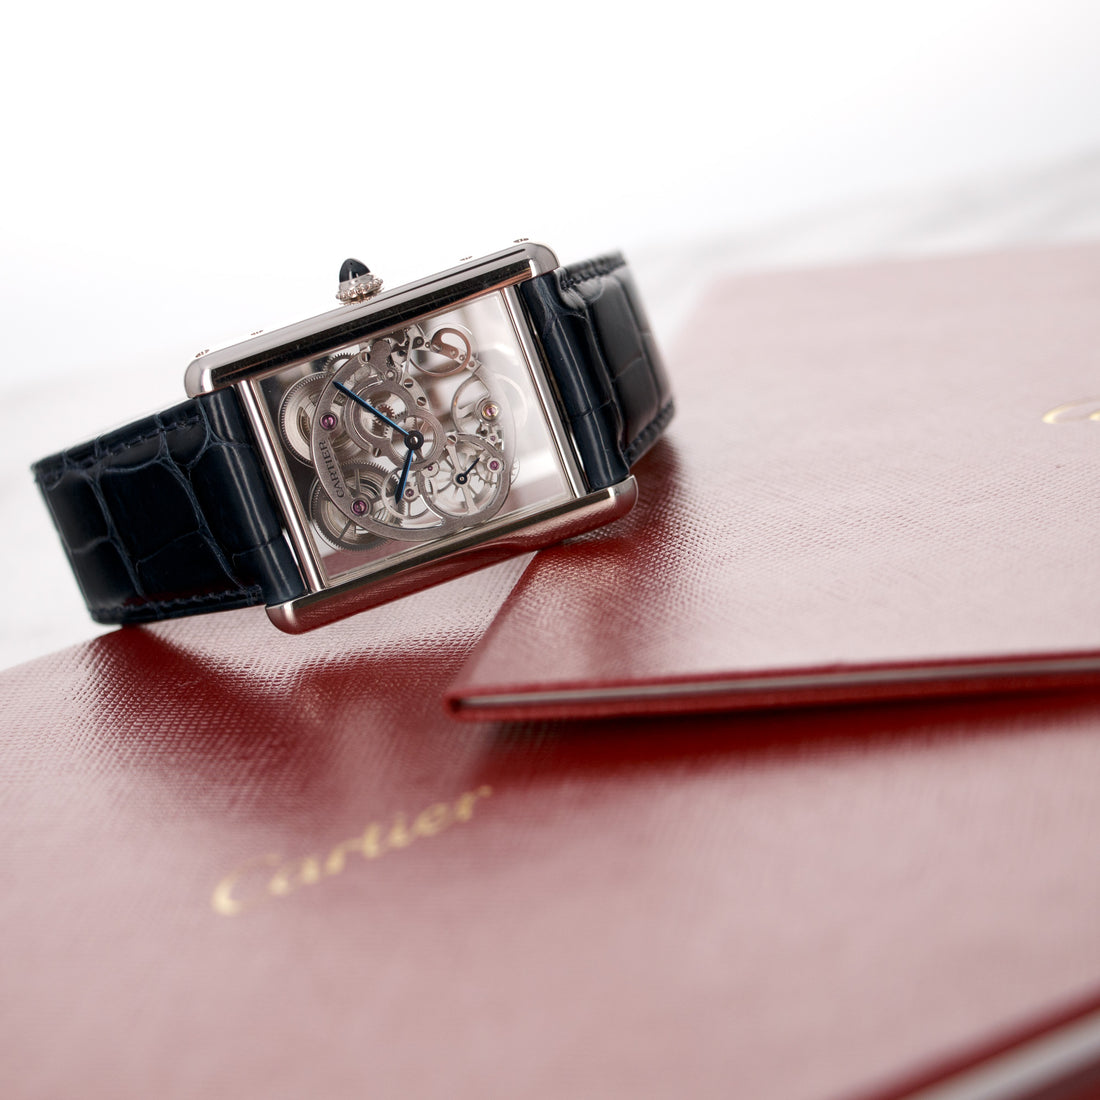 Cartier White Gold Tank Louis Skeleton Watch Ref. W5310012